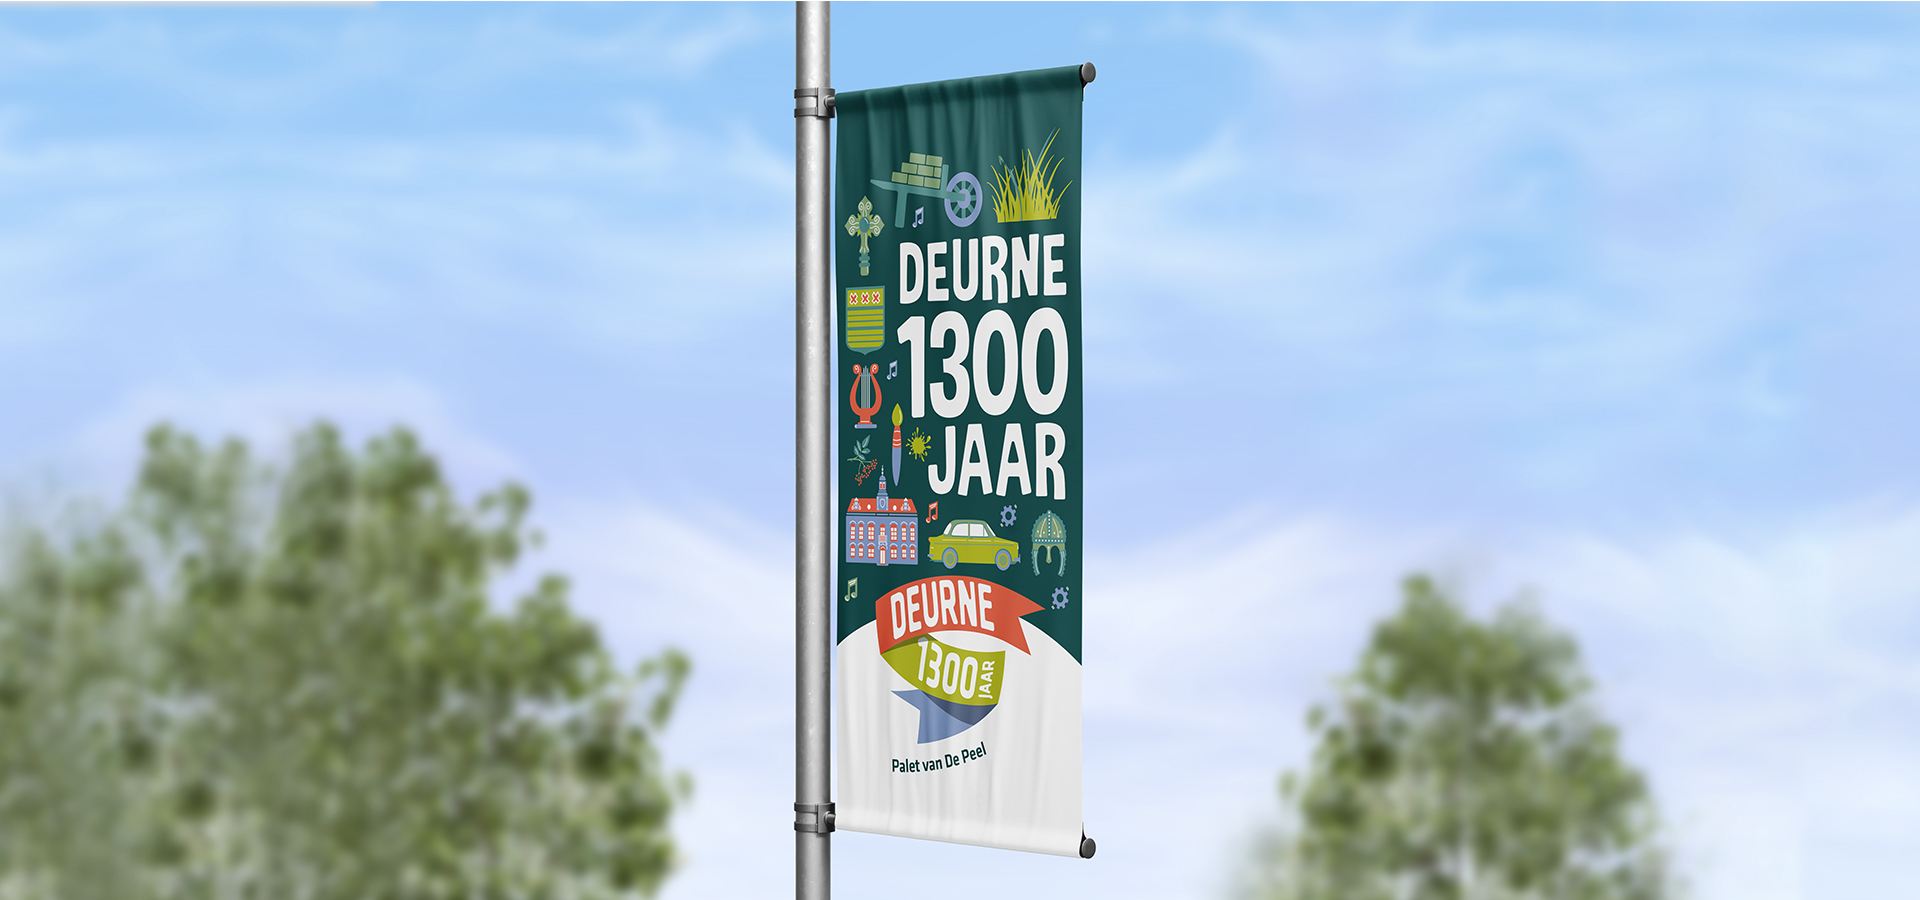 Spiegel crossmedia communicatie - Deurne 1300 jaar - Vlag